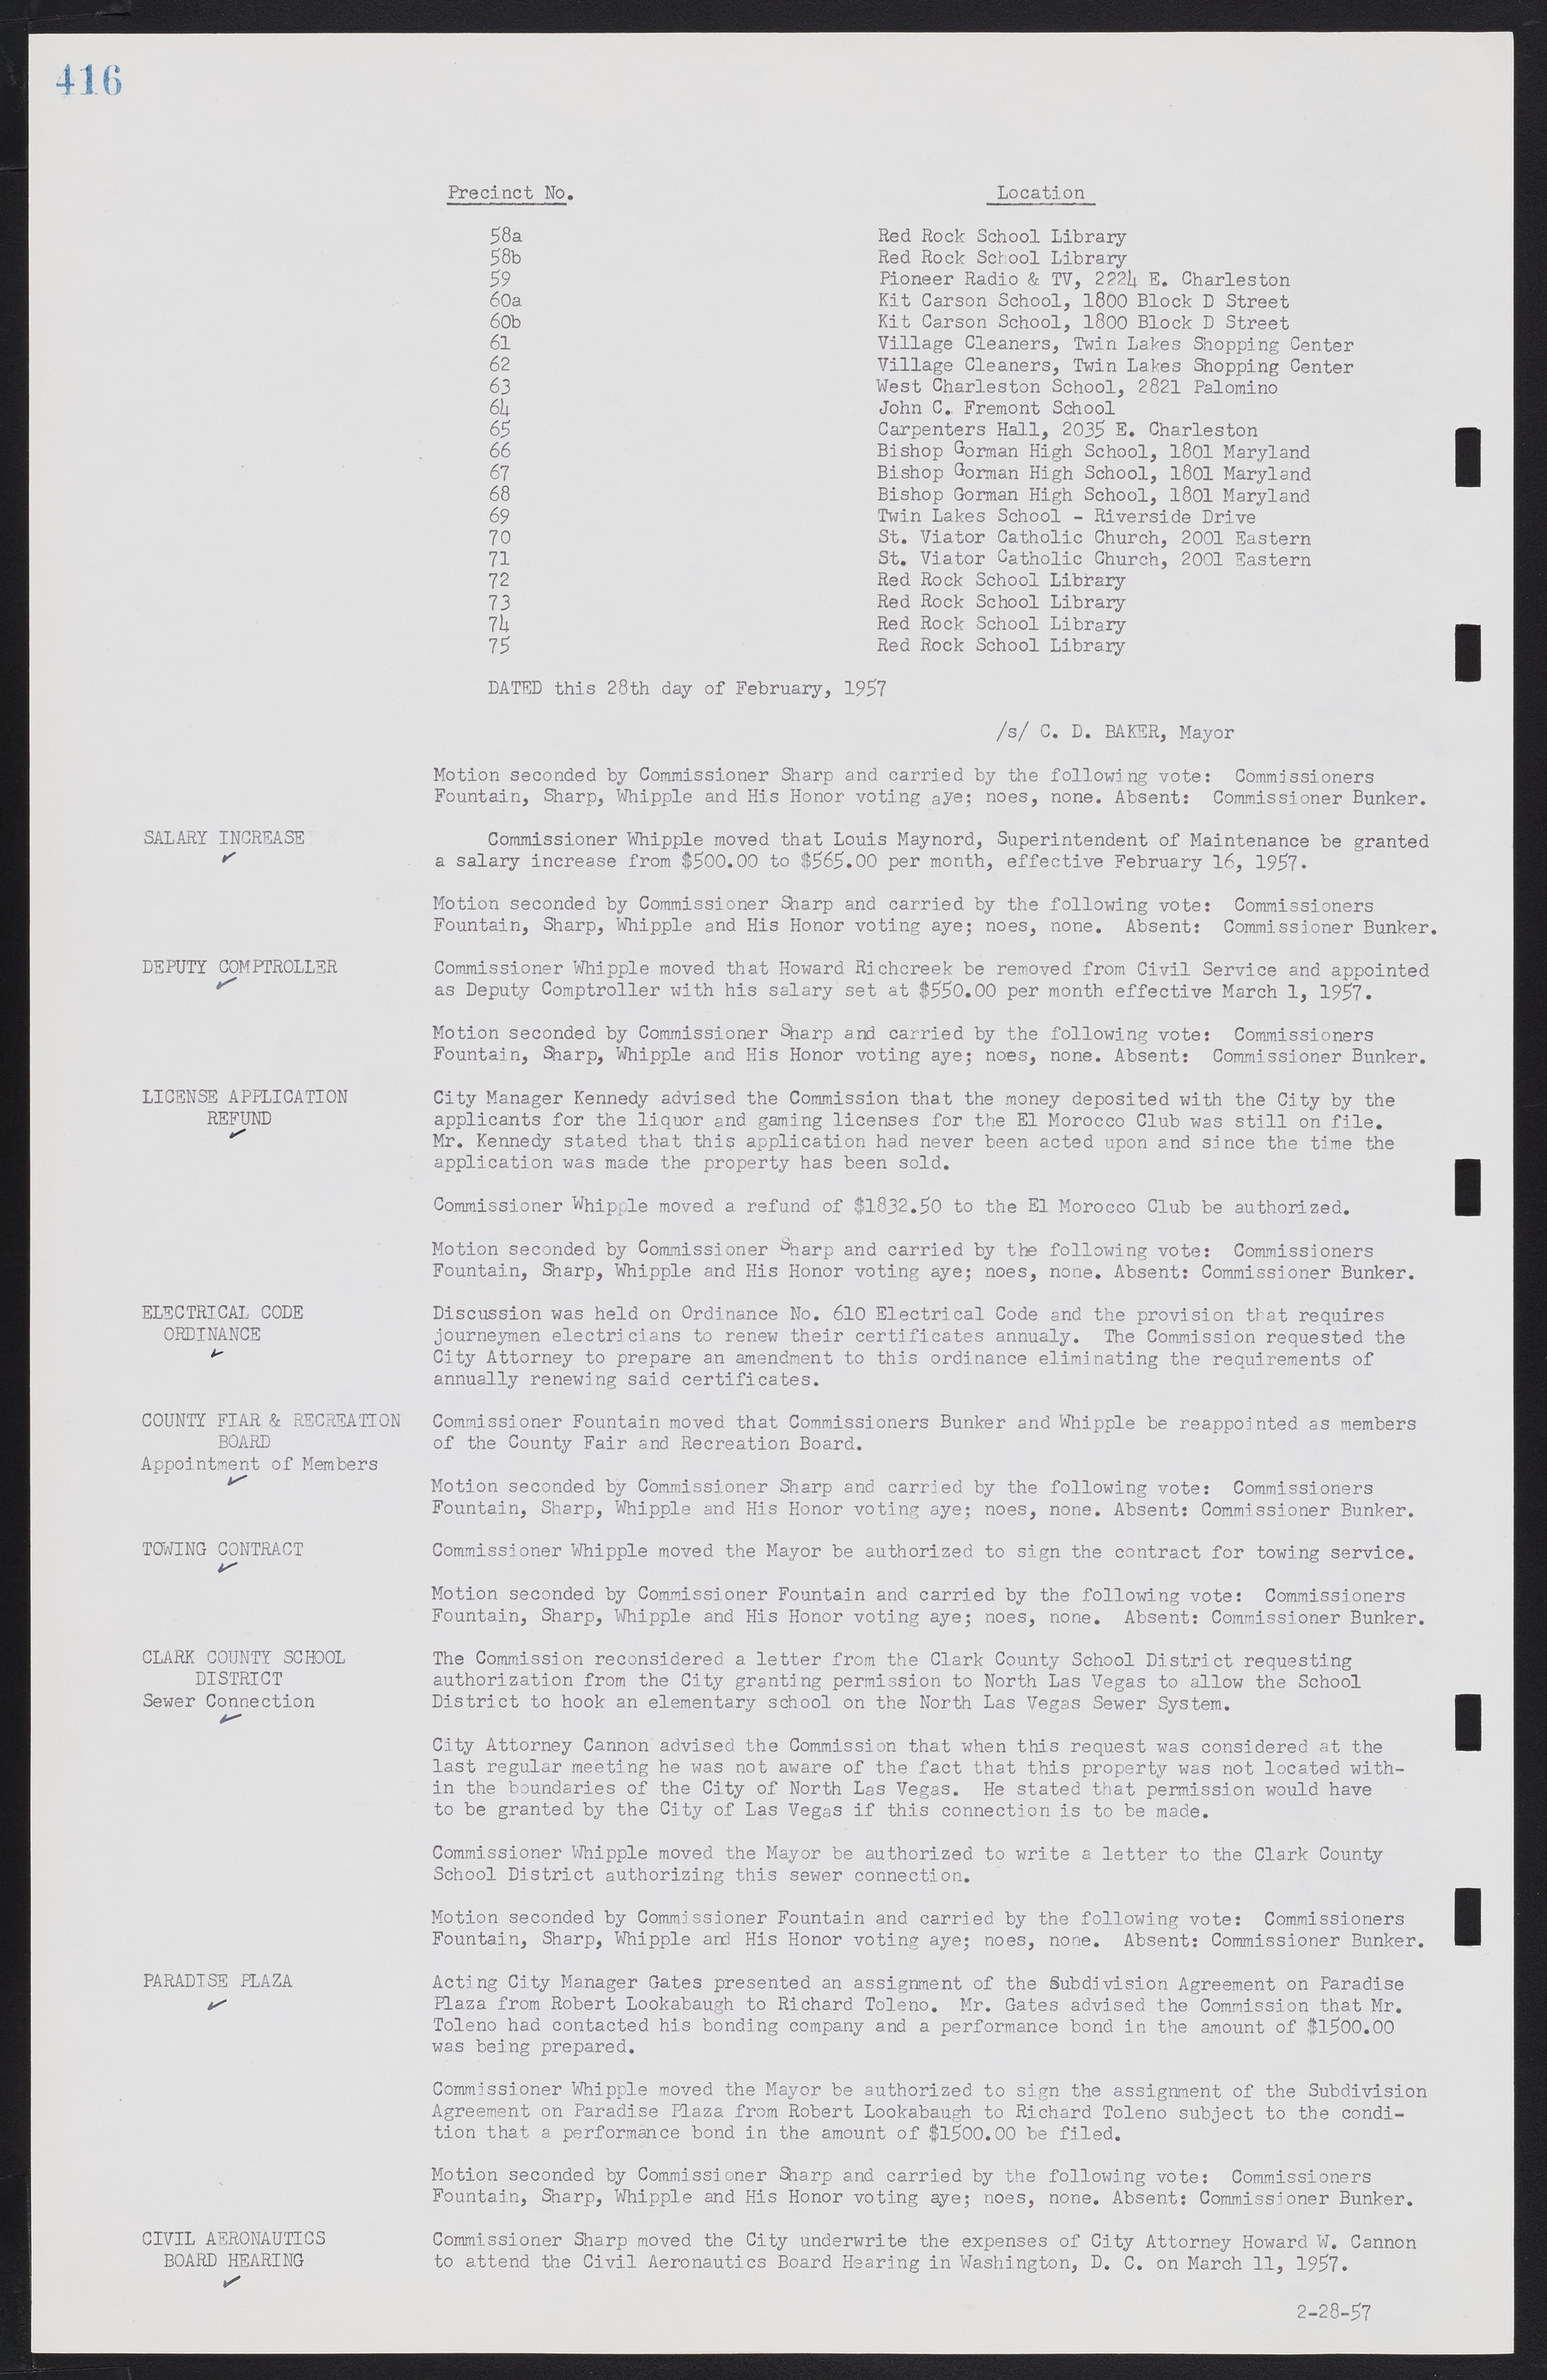 Las Vegas City Commission Minutes, September 21, 1955 to November 20, 1957, lvc000010-436